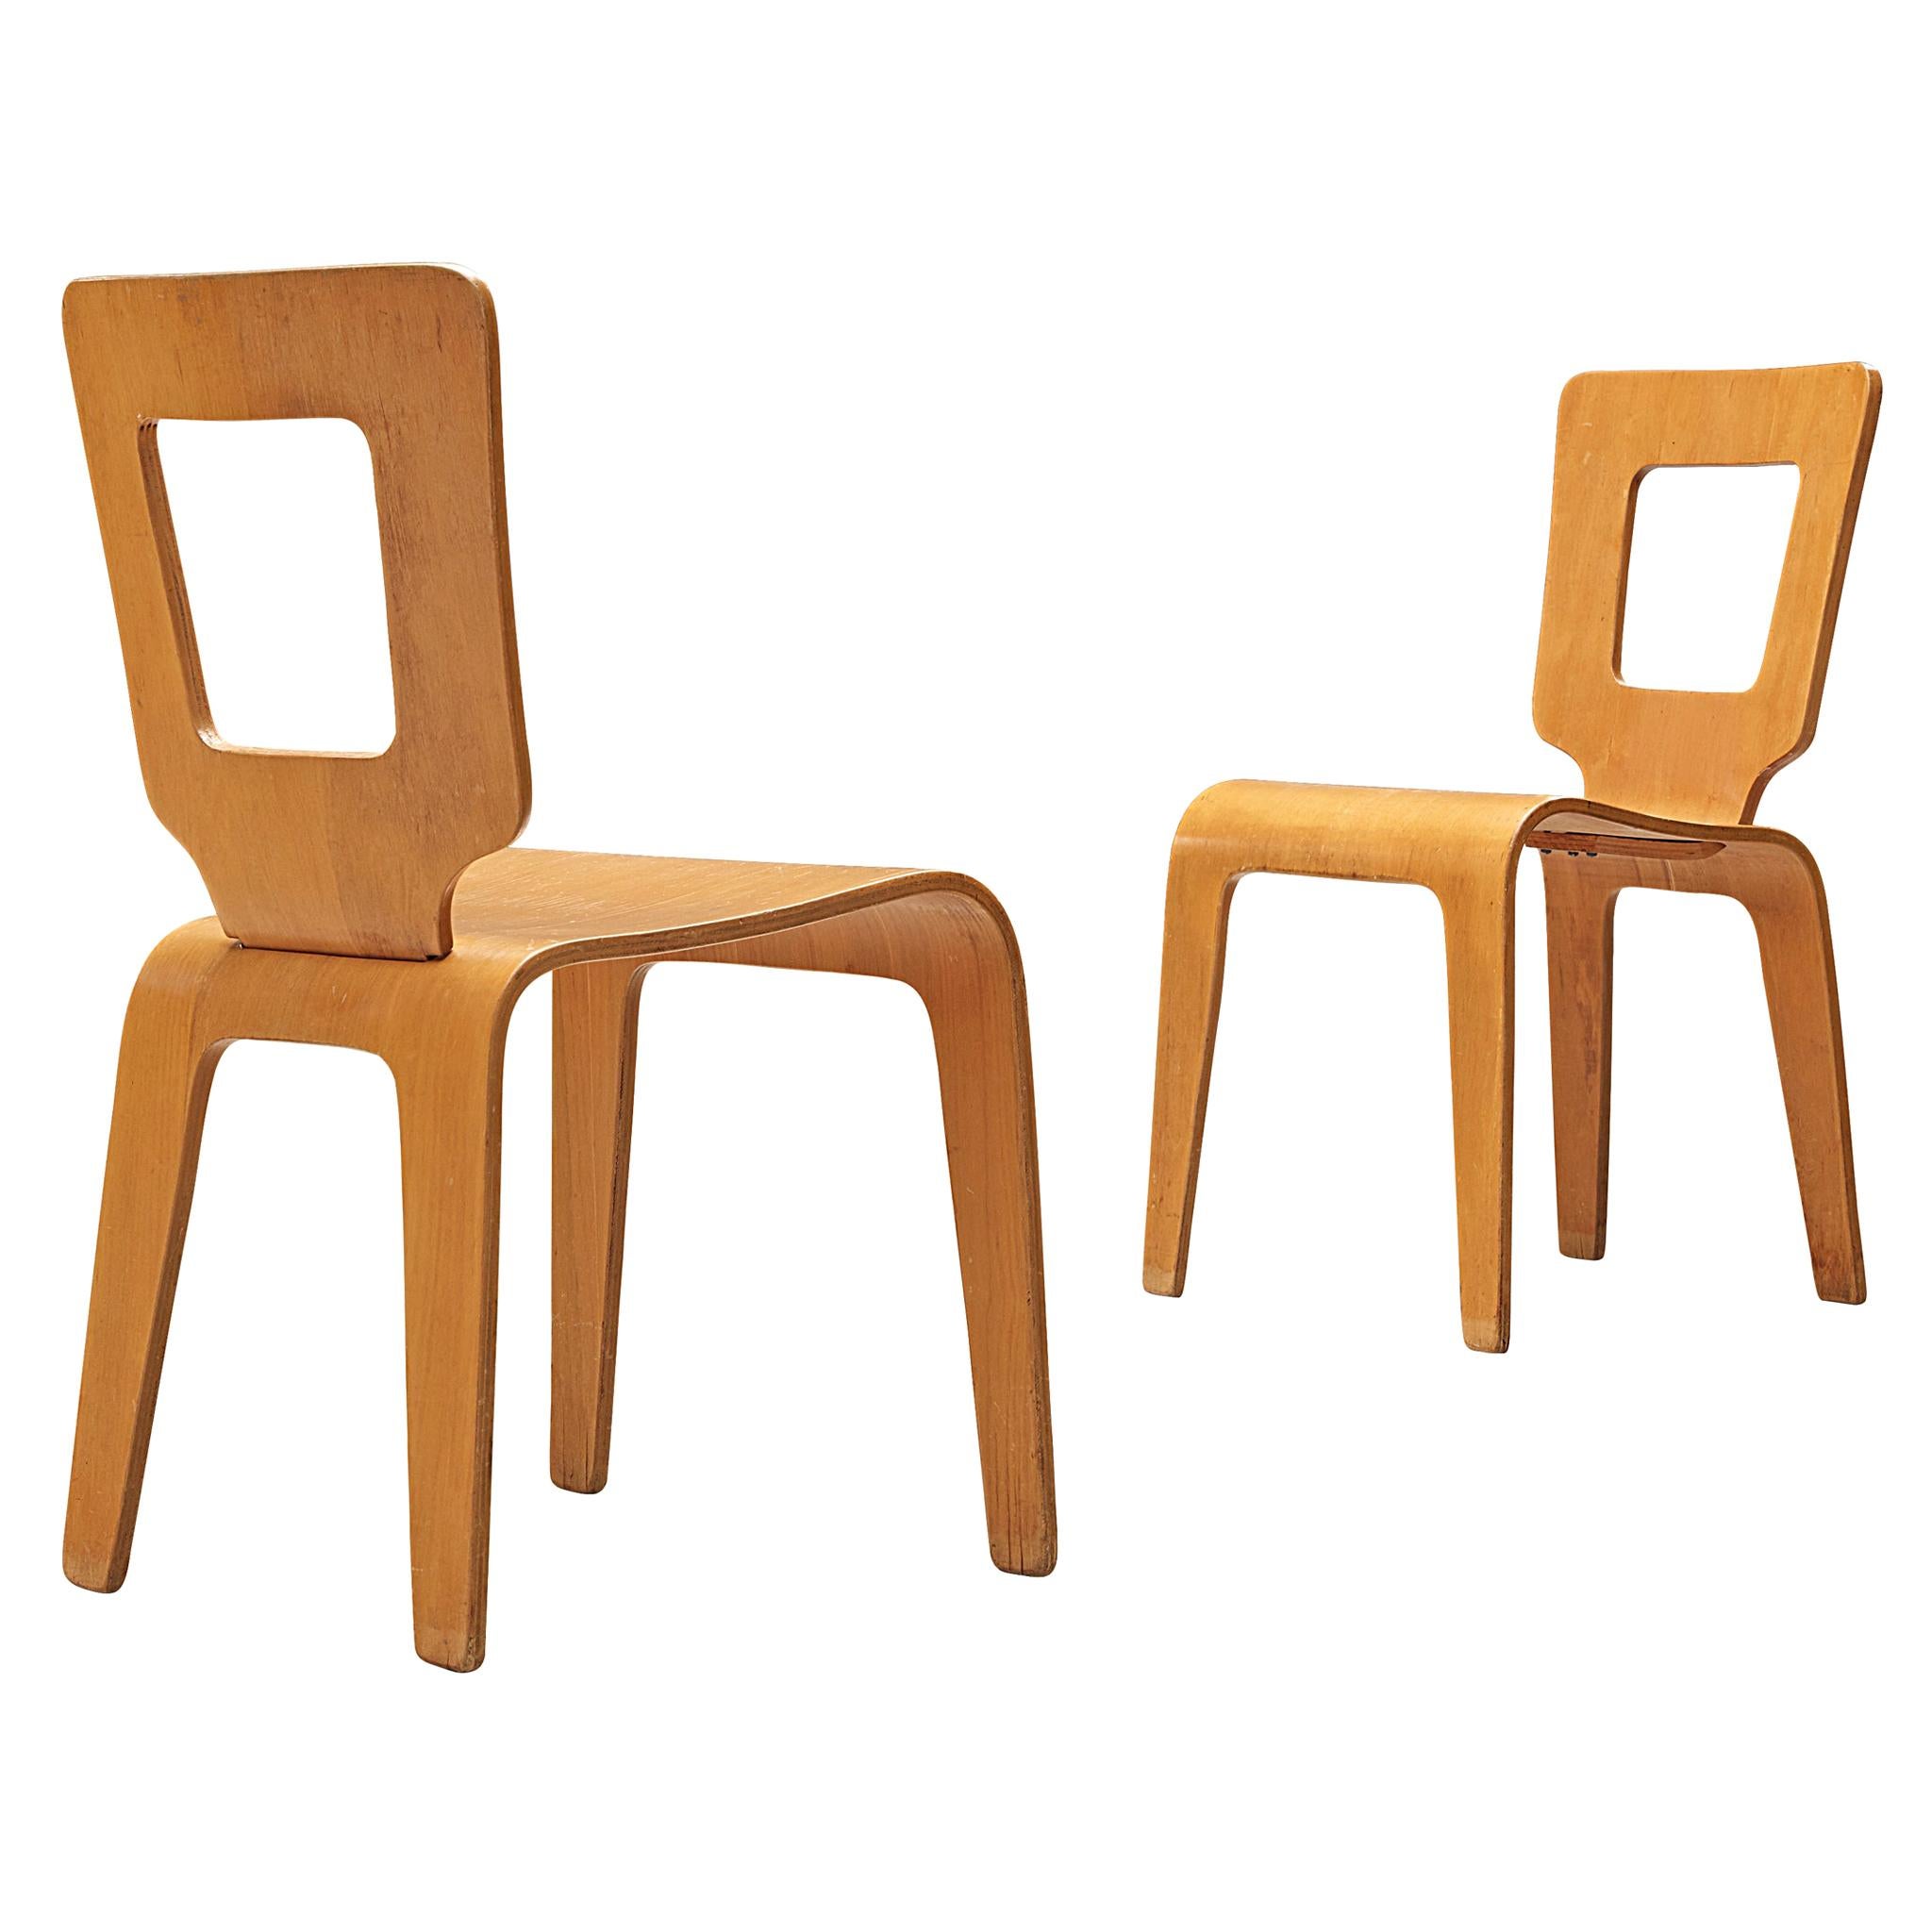 Herbert von Jordan Chairs in Plywood